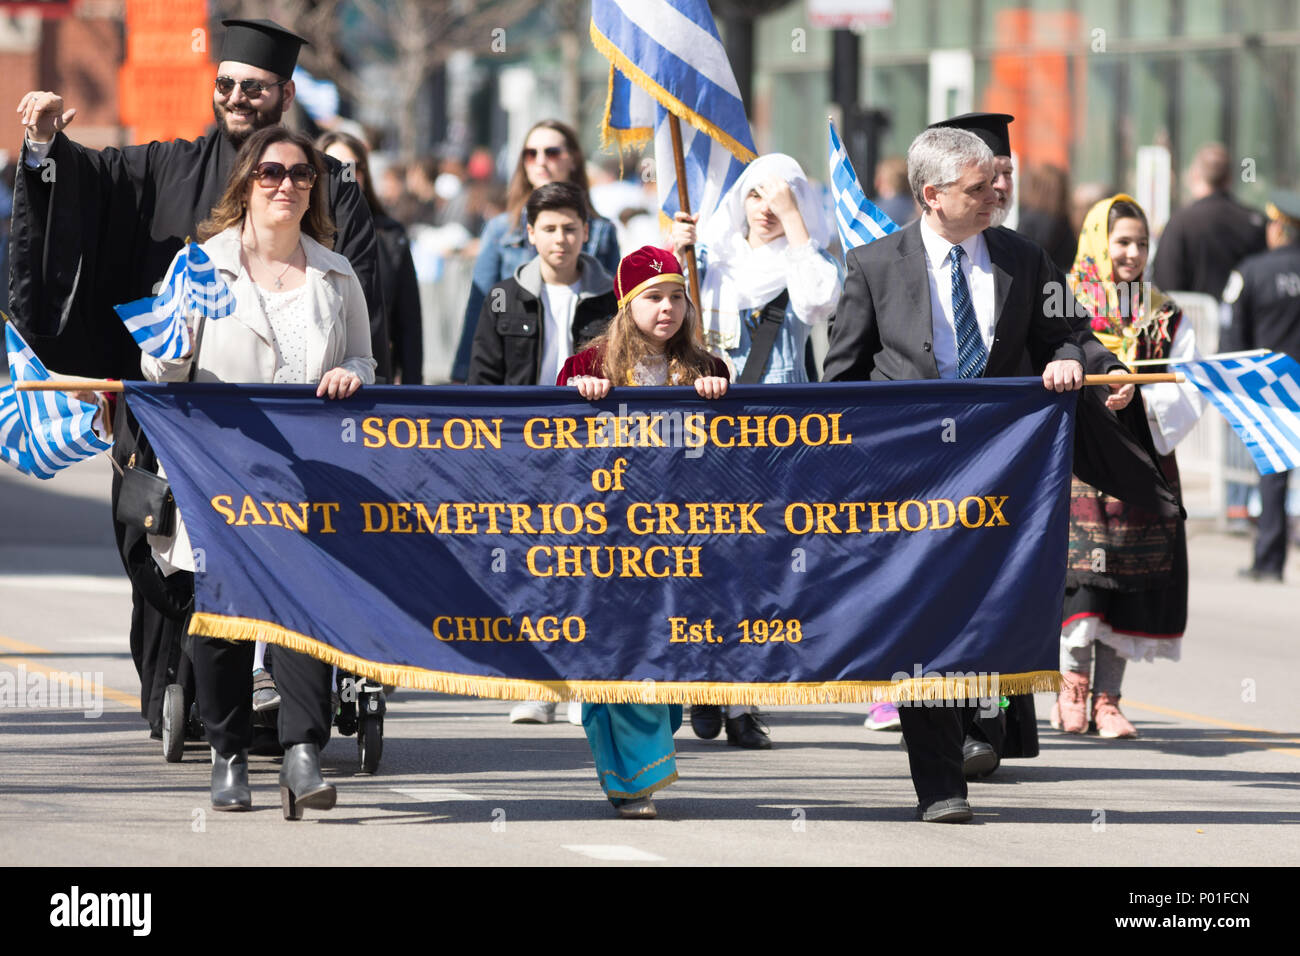 Chicago, Illinois, USA - April 29, 2018 Members of the Solon Greek School of Saint Demetrios Greek Orthodox Church wearing traditional clothing and wa Stock Photo